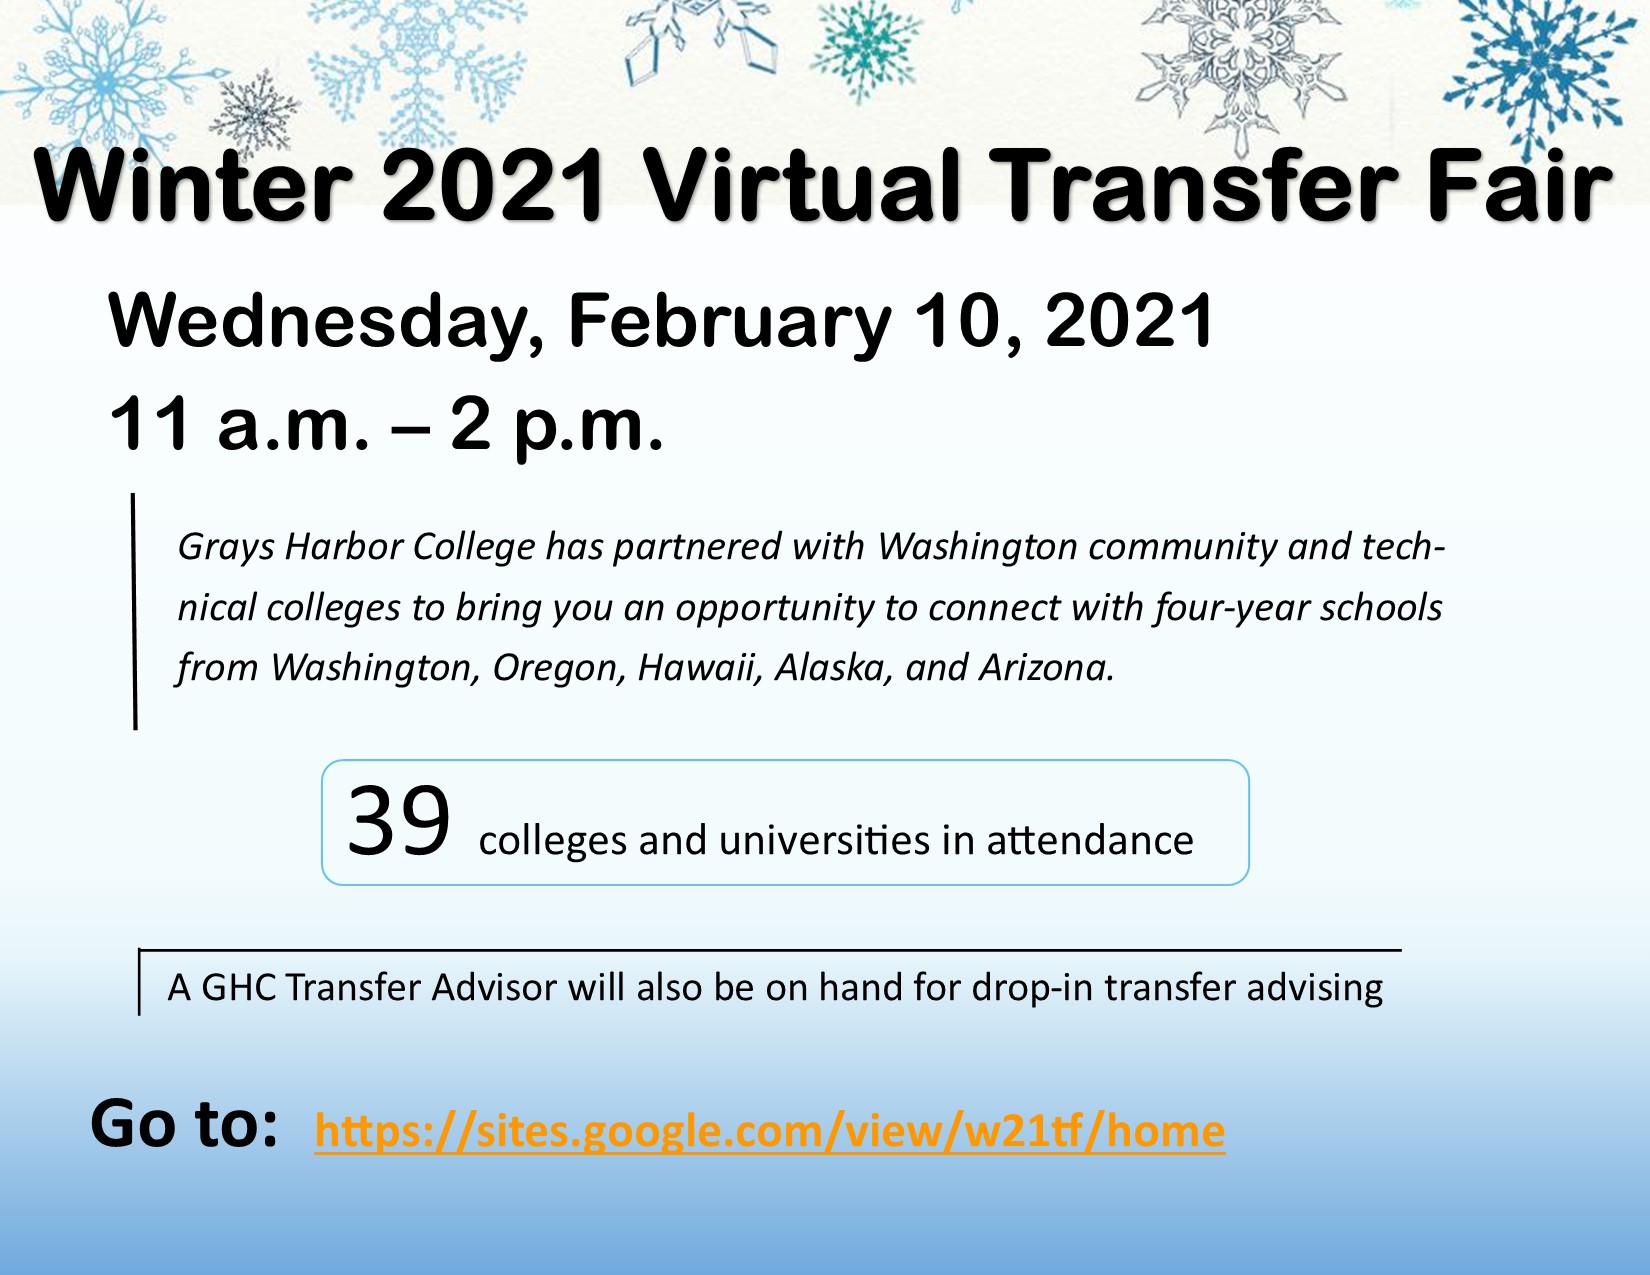 Winter 2021 Virtual Transfer Fair February 10, 2021